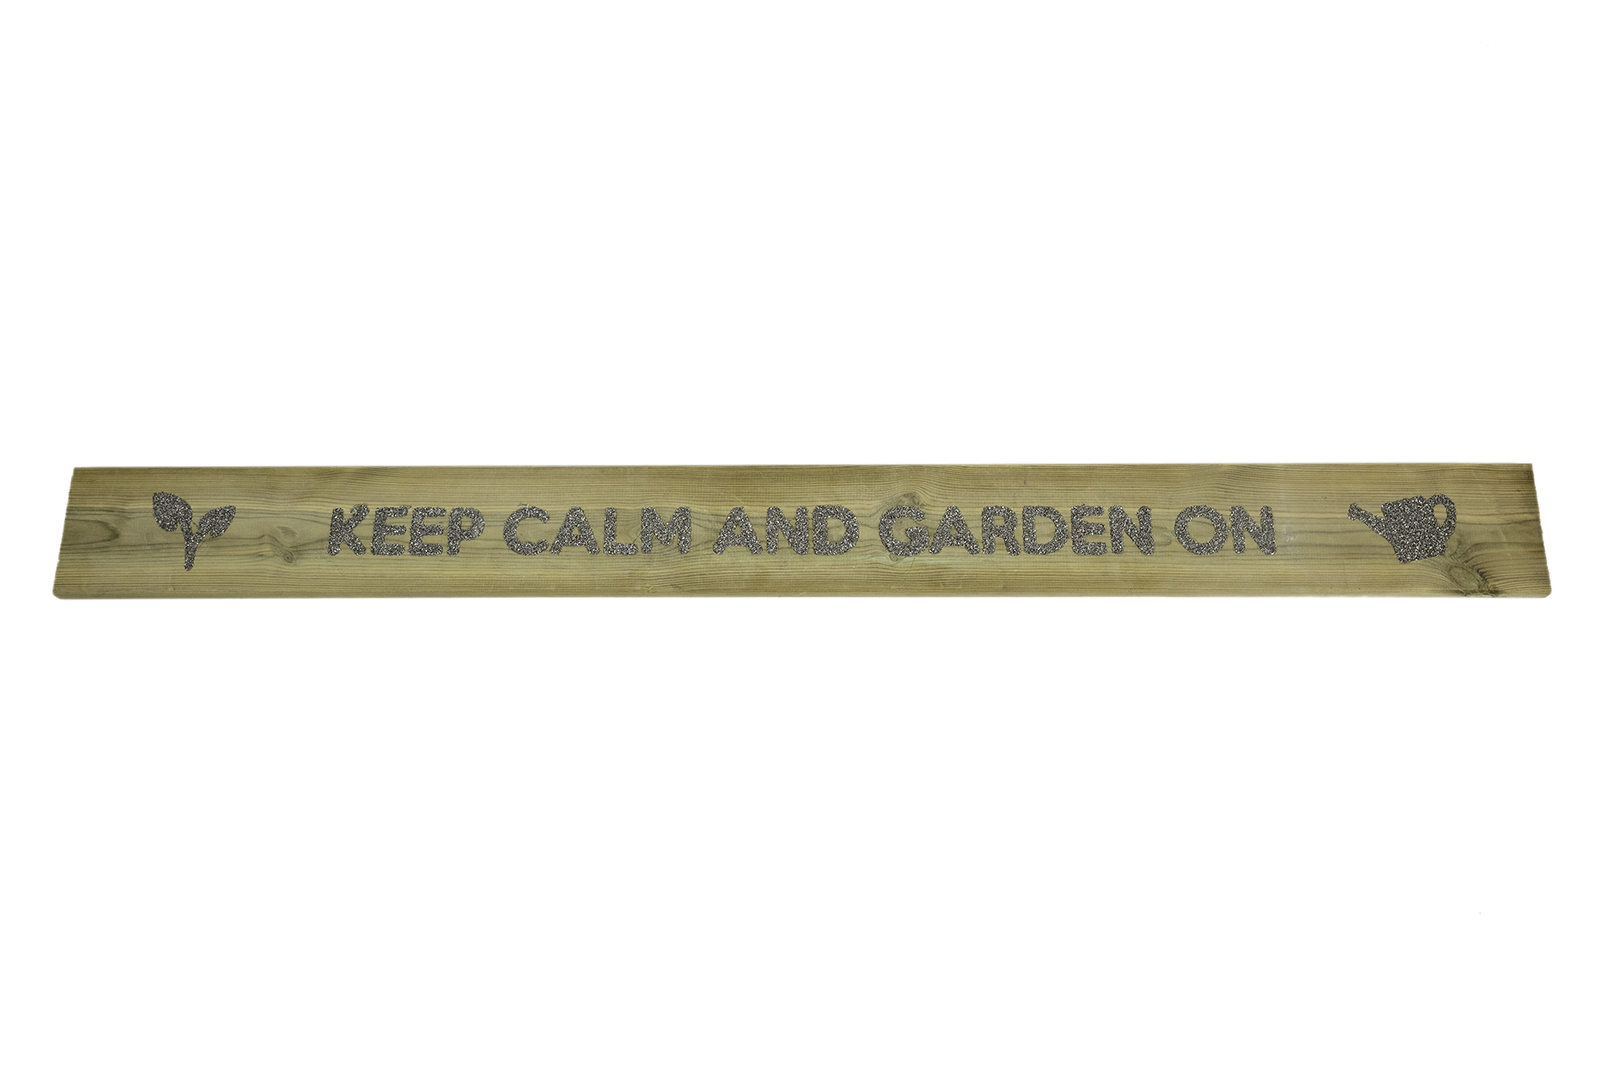 Gripsure DeckArt Keep Calm And Garden On